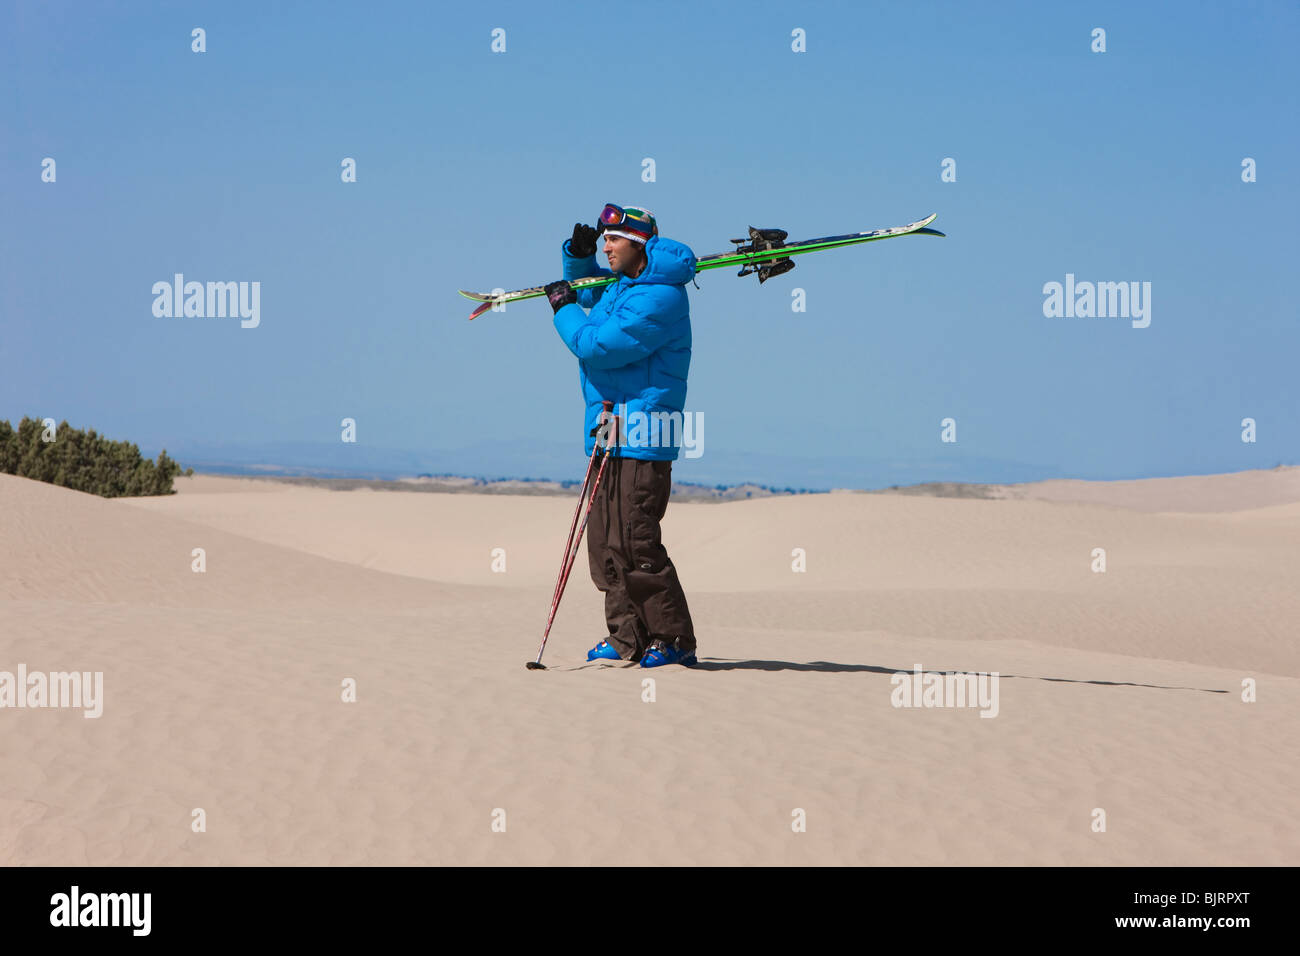 USA, Utah, Little Sahara, man with skiwear in desert Stock Photo